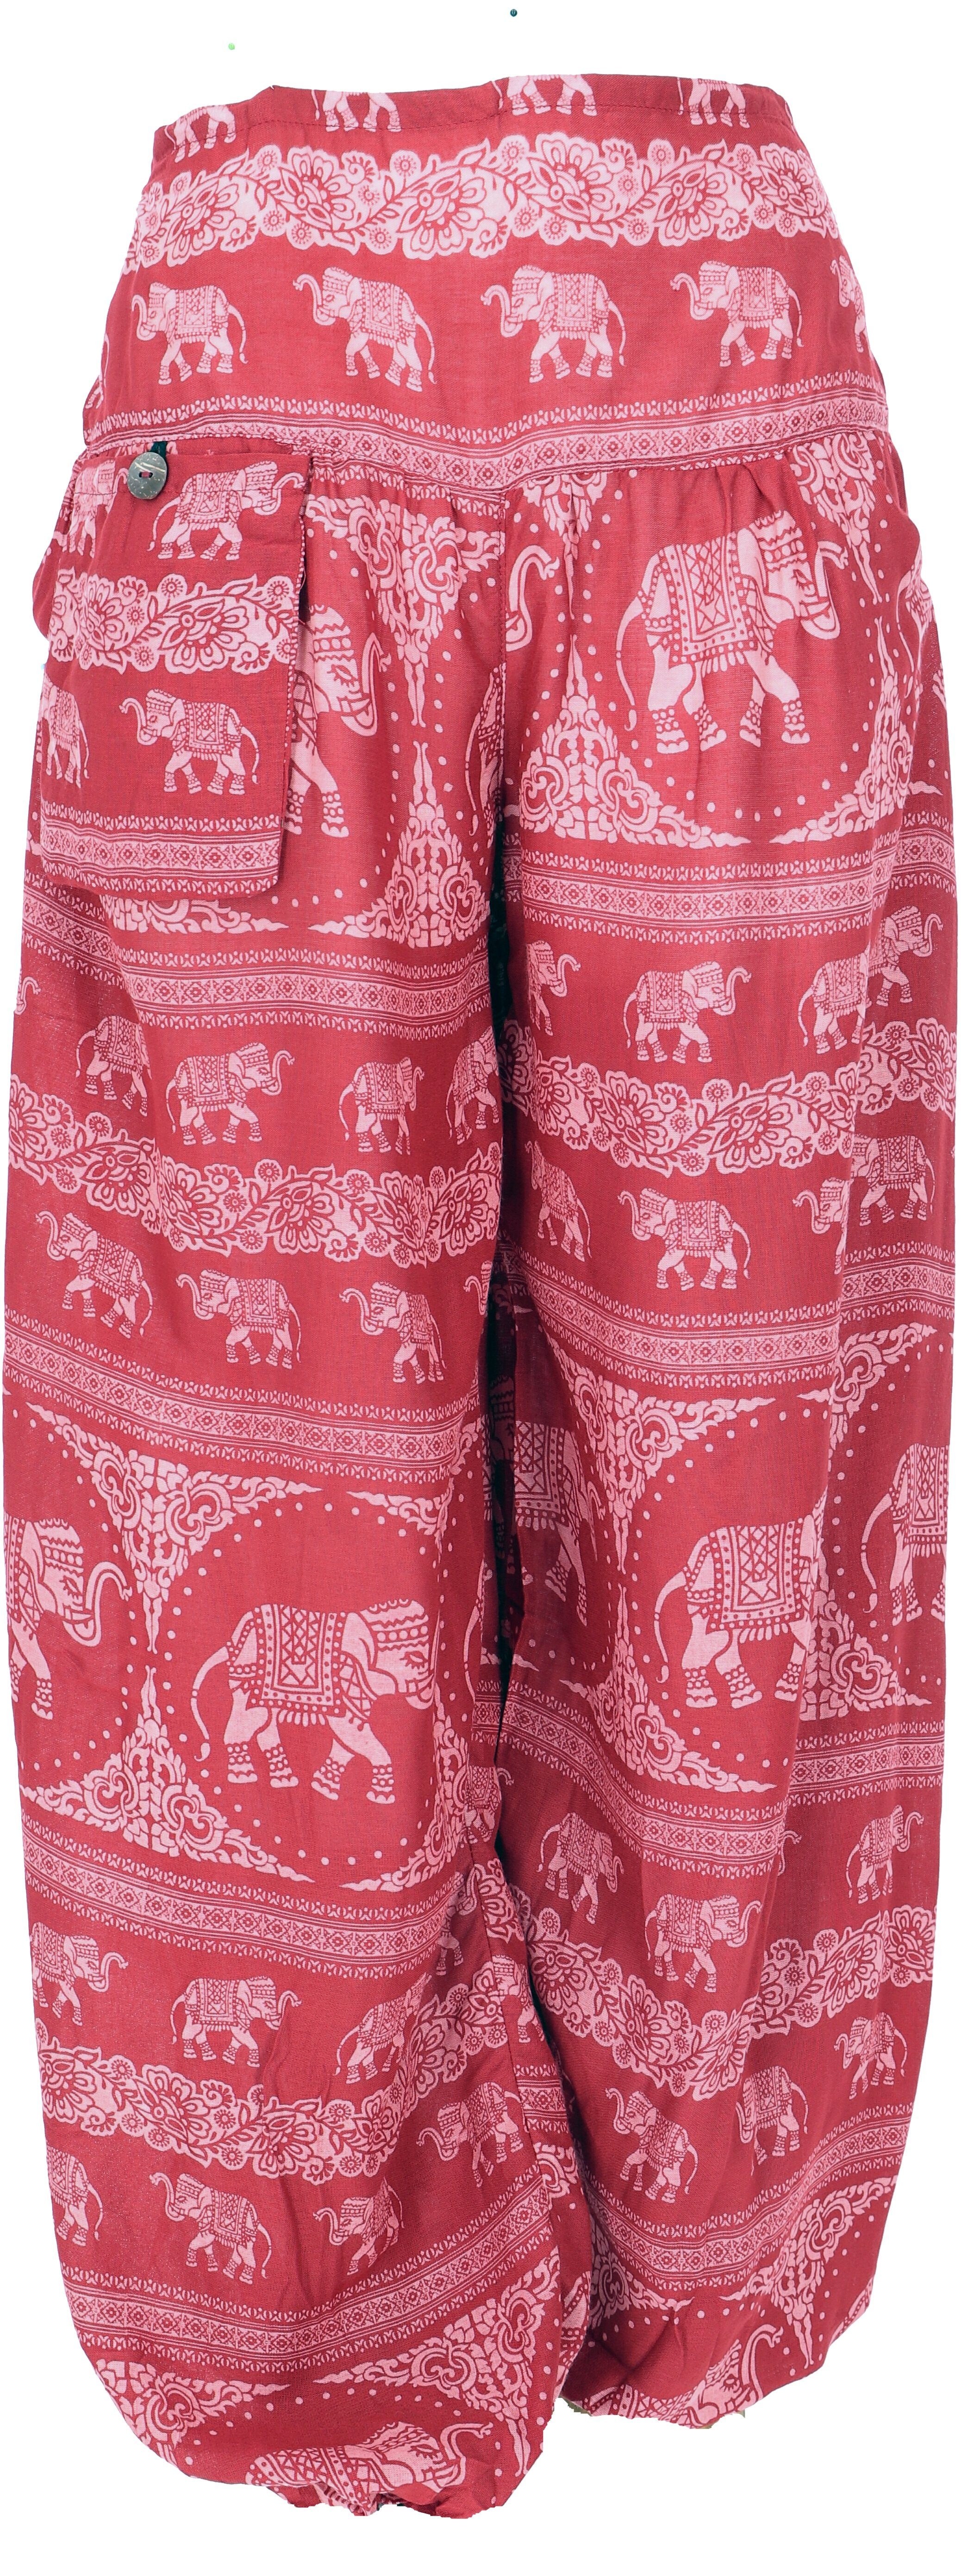 Relaxhose Ethno Luftige Style, mit rot Pluderhose alternative Bekleidung Elefantendruck,.. Guru-Shop